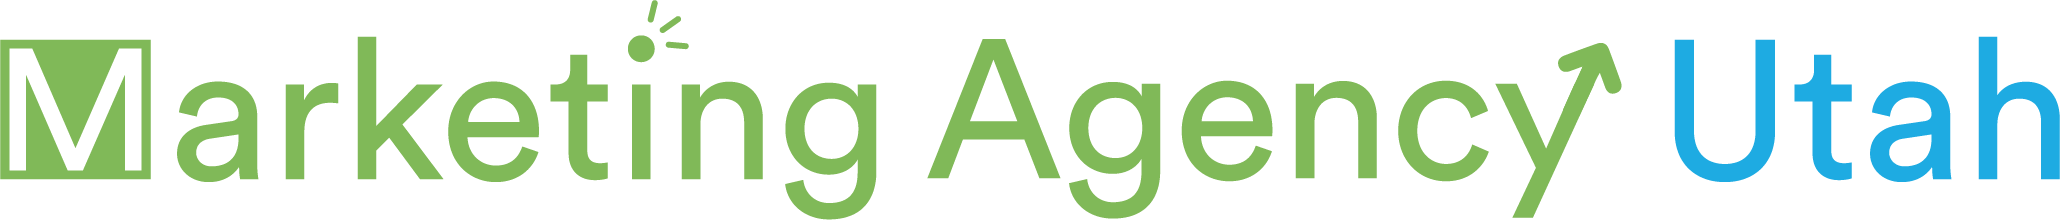 Marketing-Agency-Logo